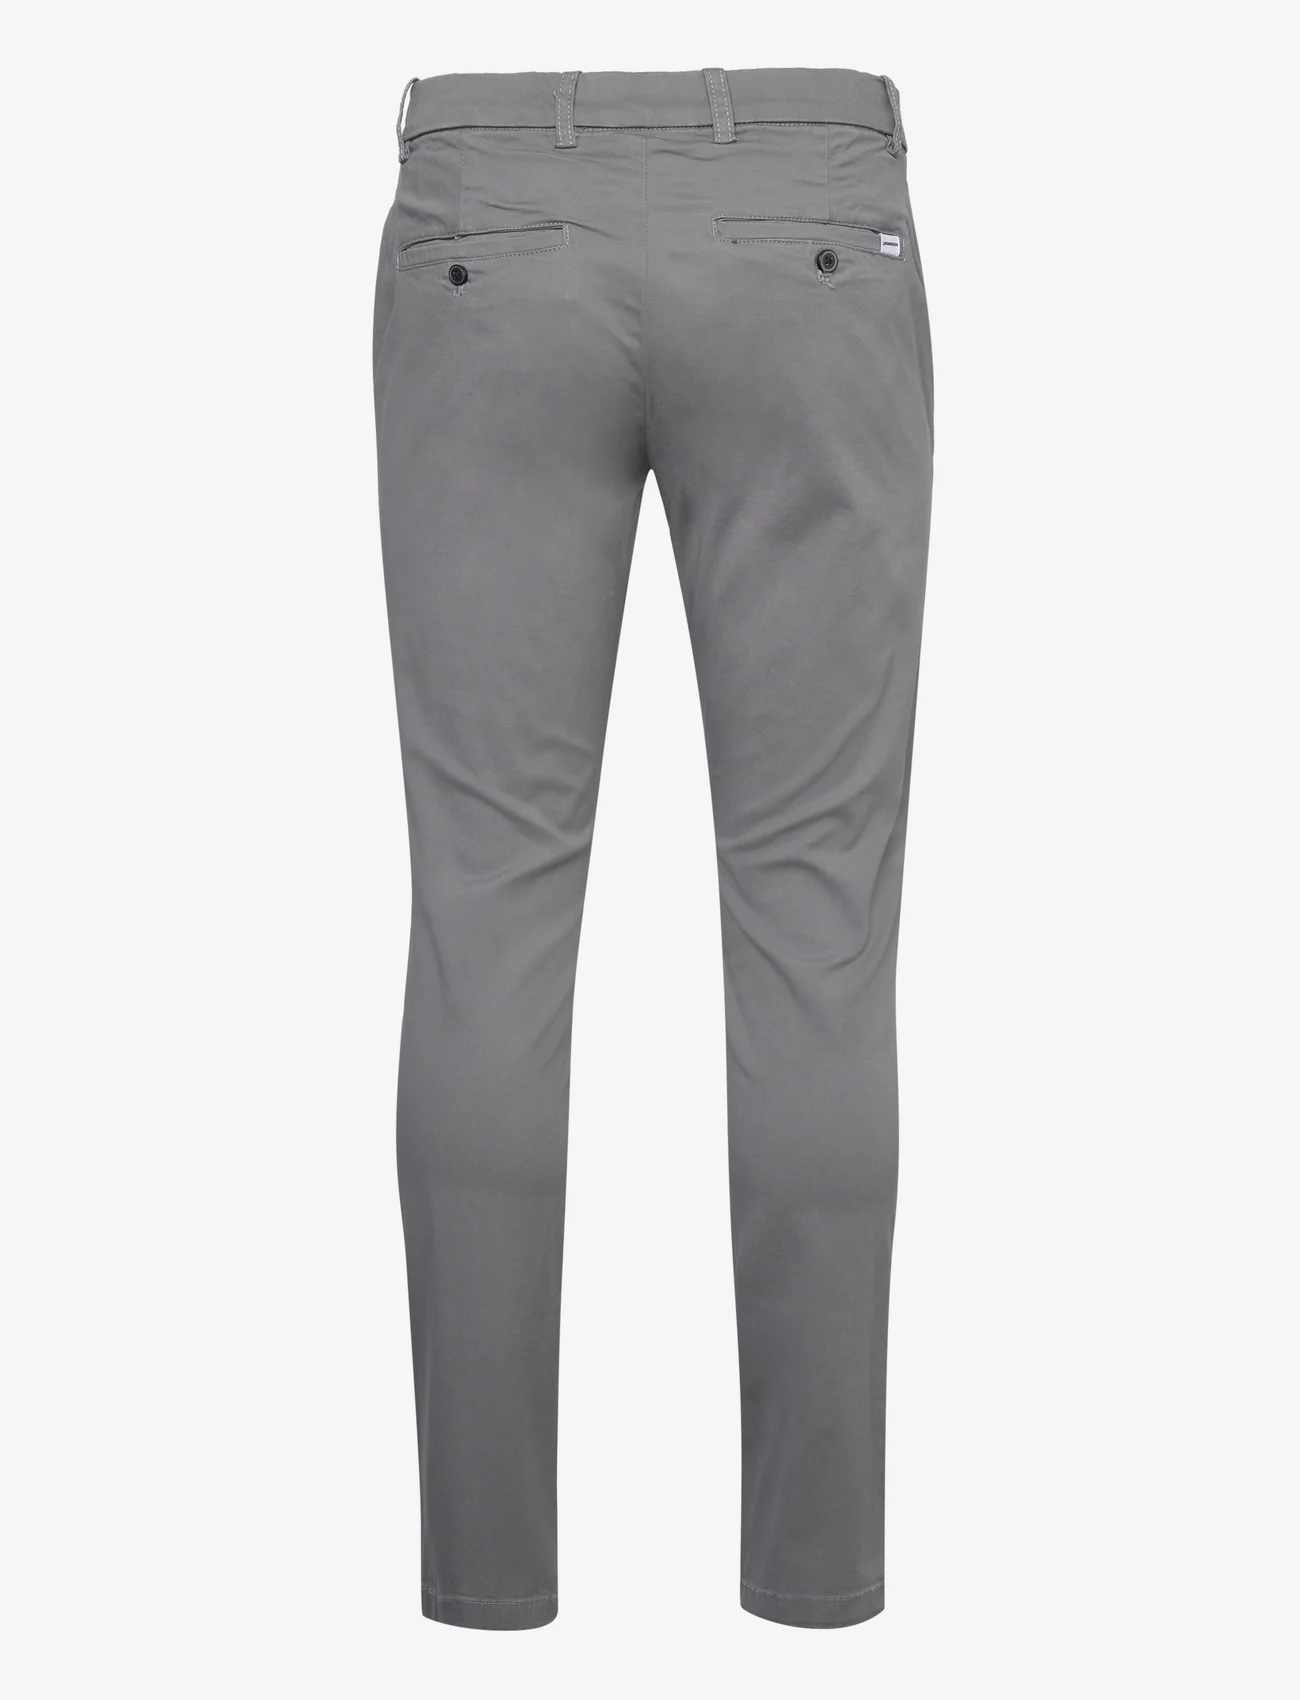 Lindbergh - Superflex chino pants - chino stila bikses - dk deep grey - 1